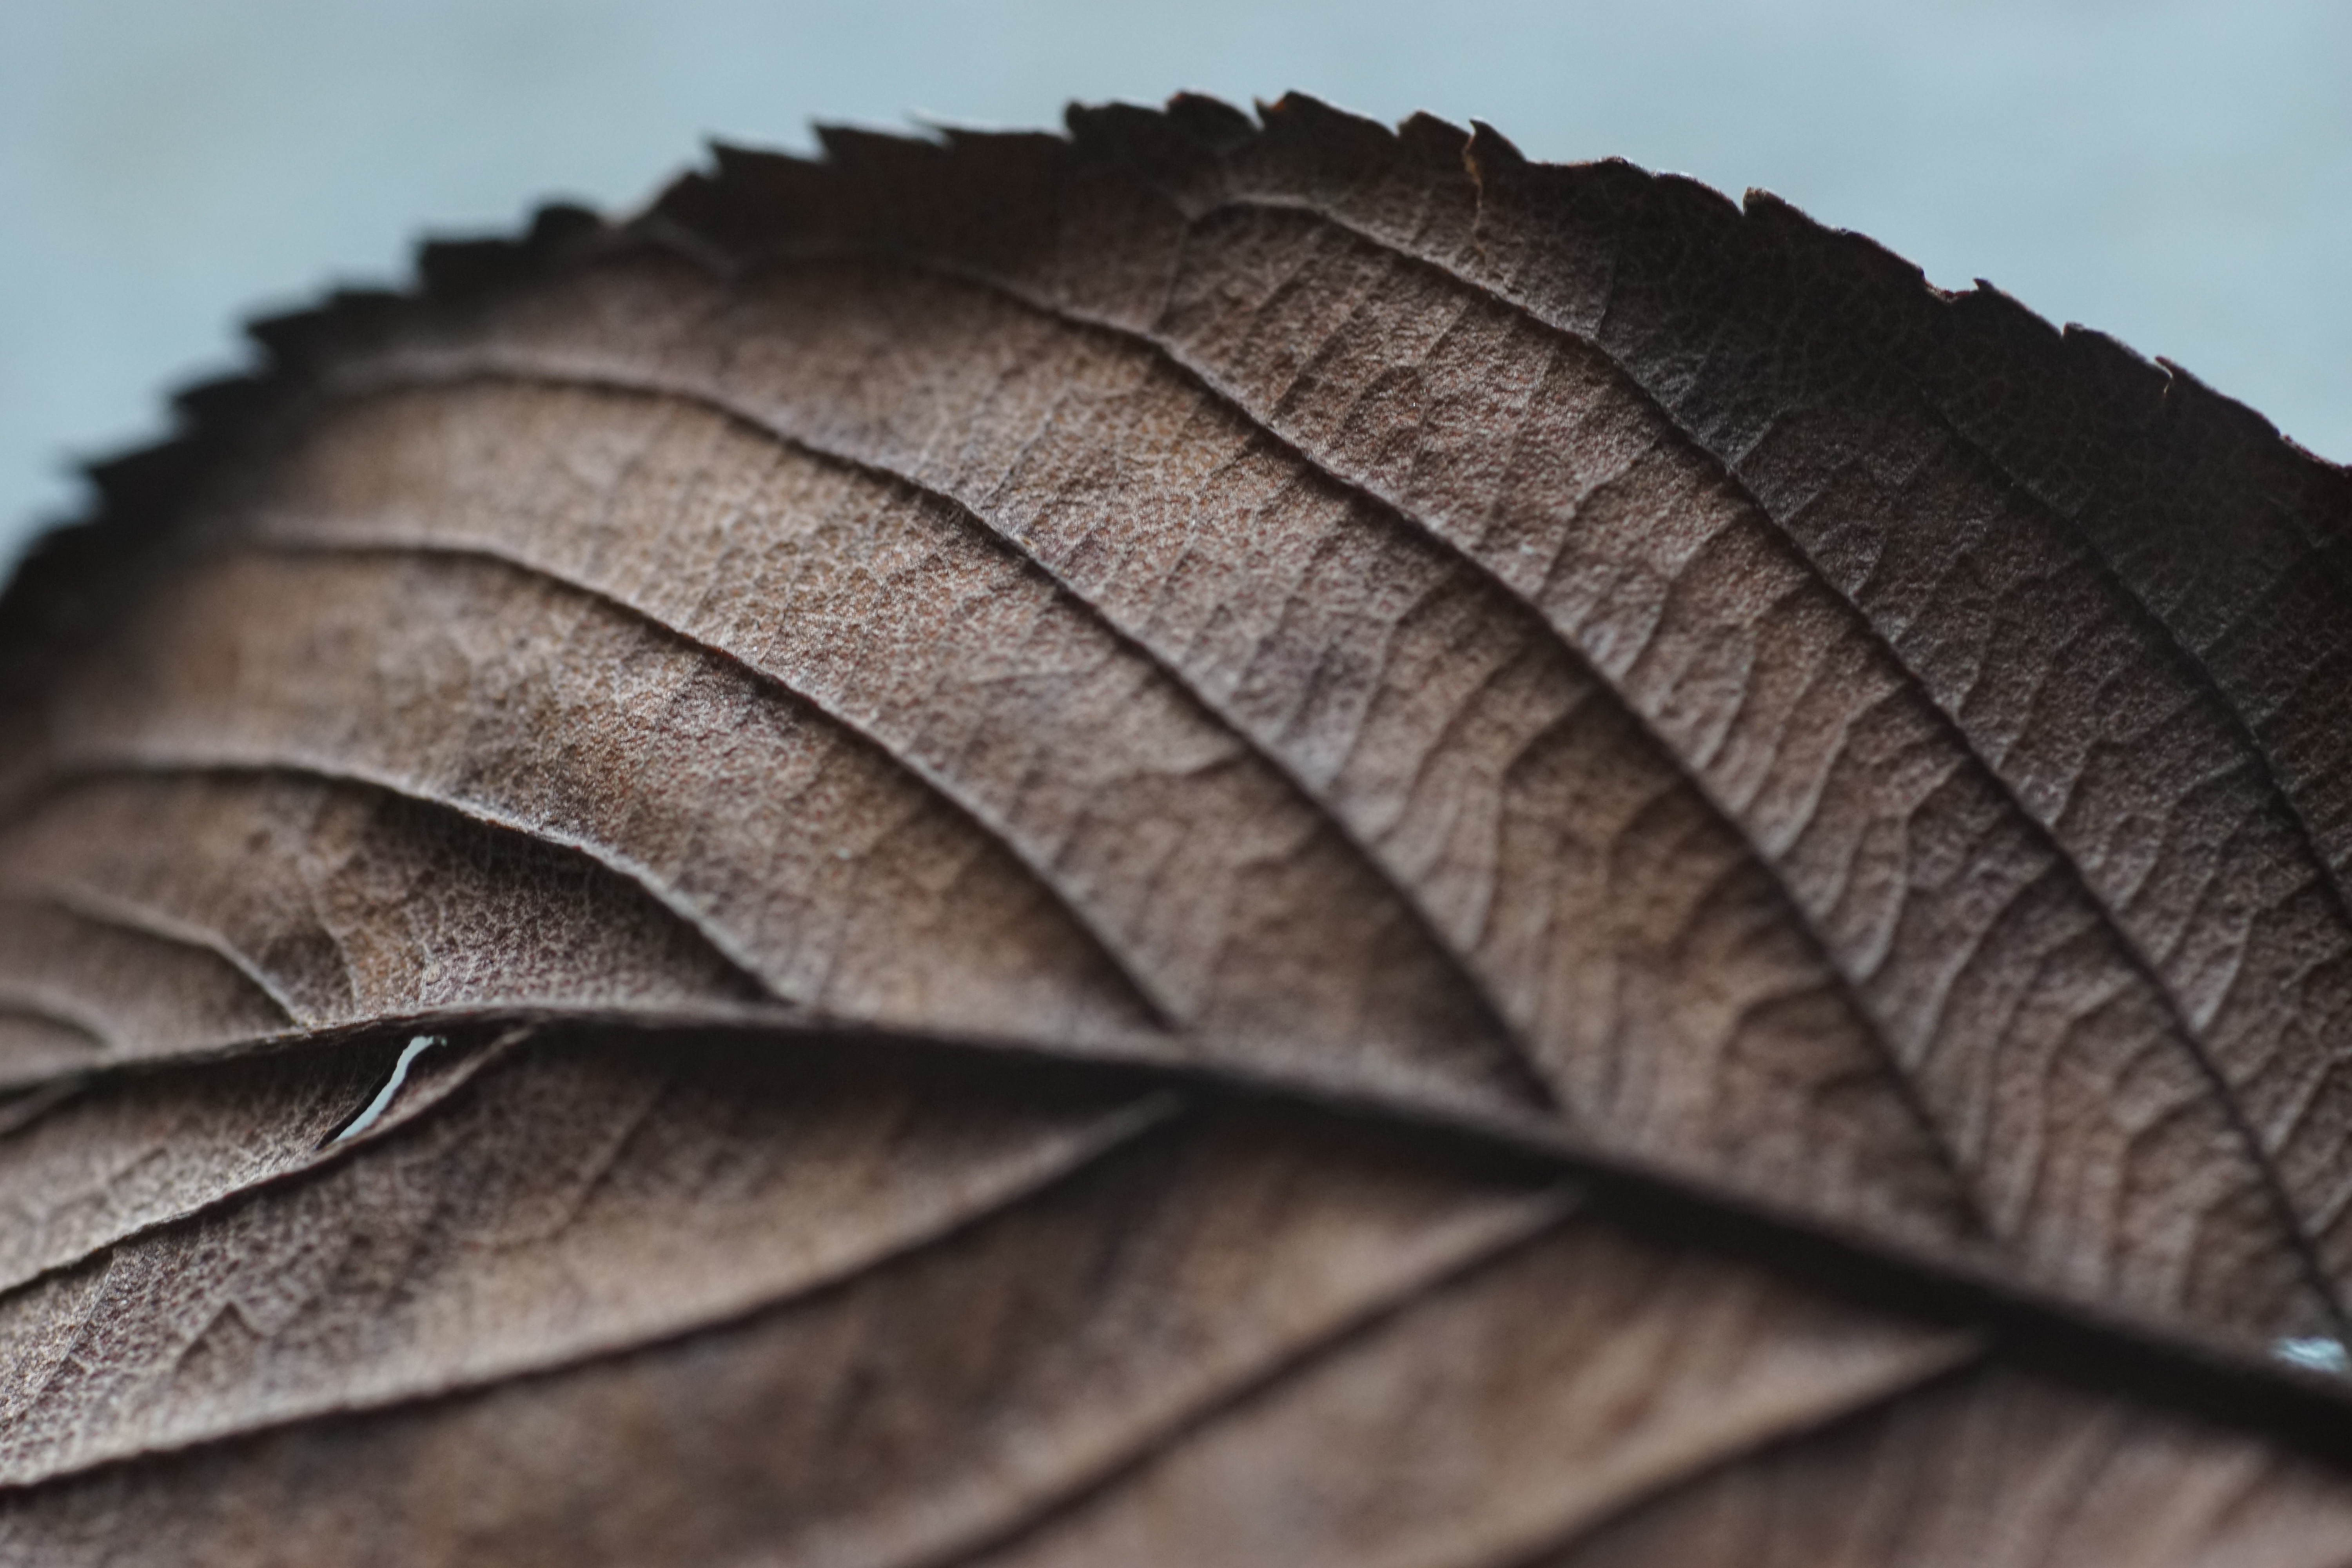 Leaf by Hiroyuki Igarashi via Unsplash